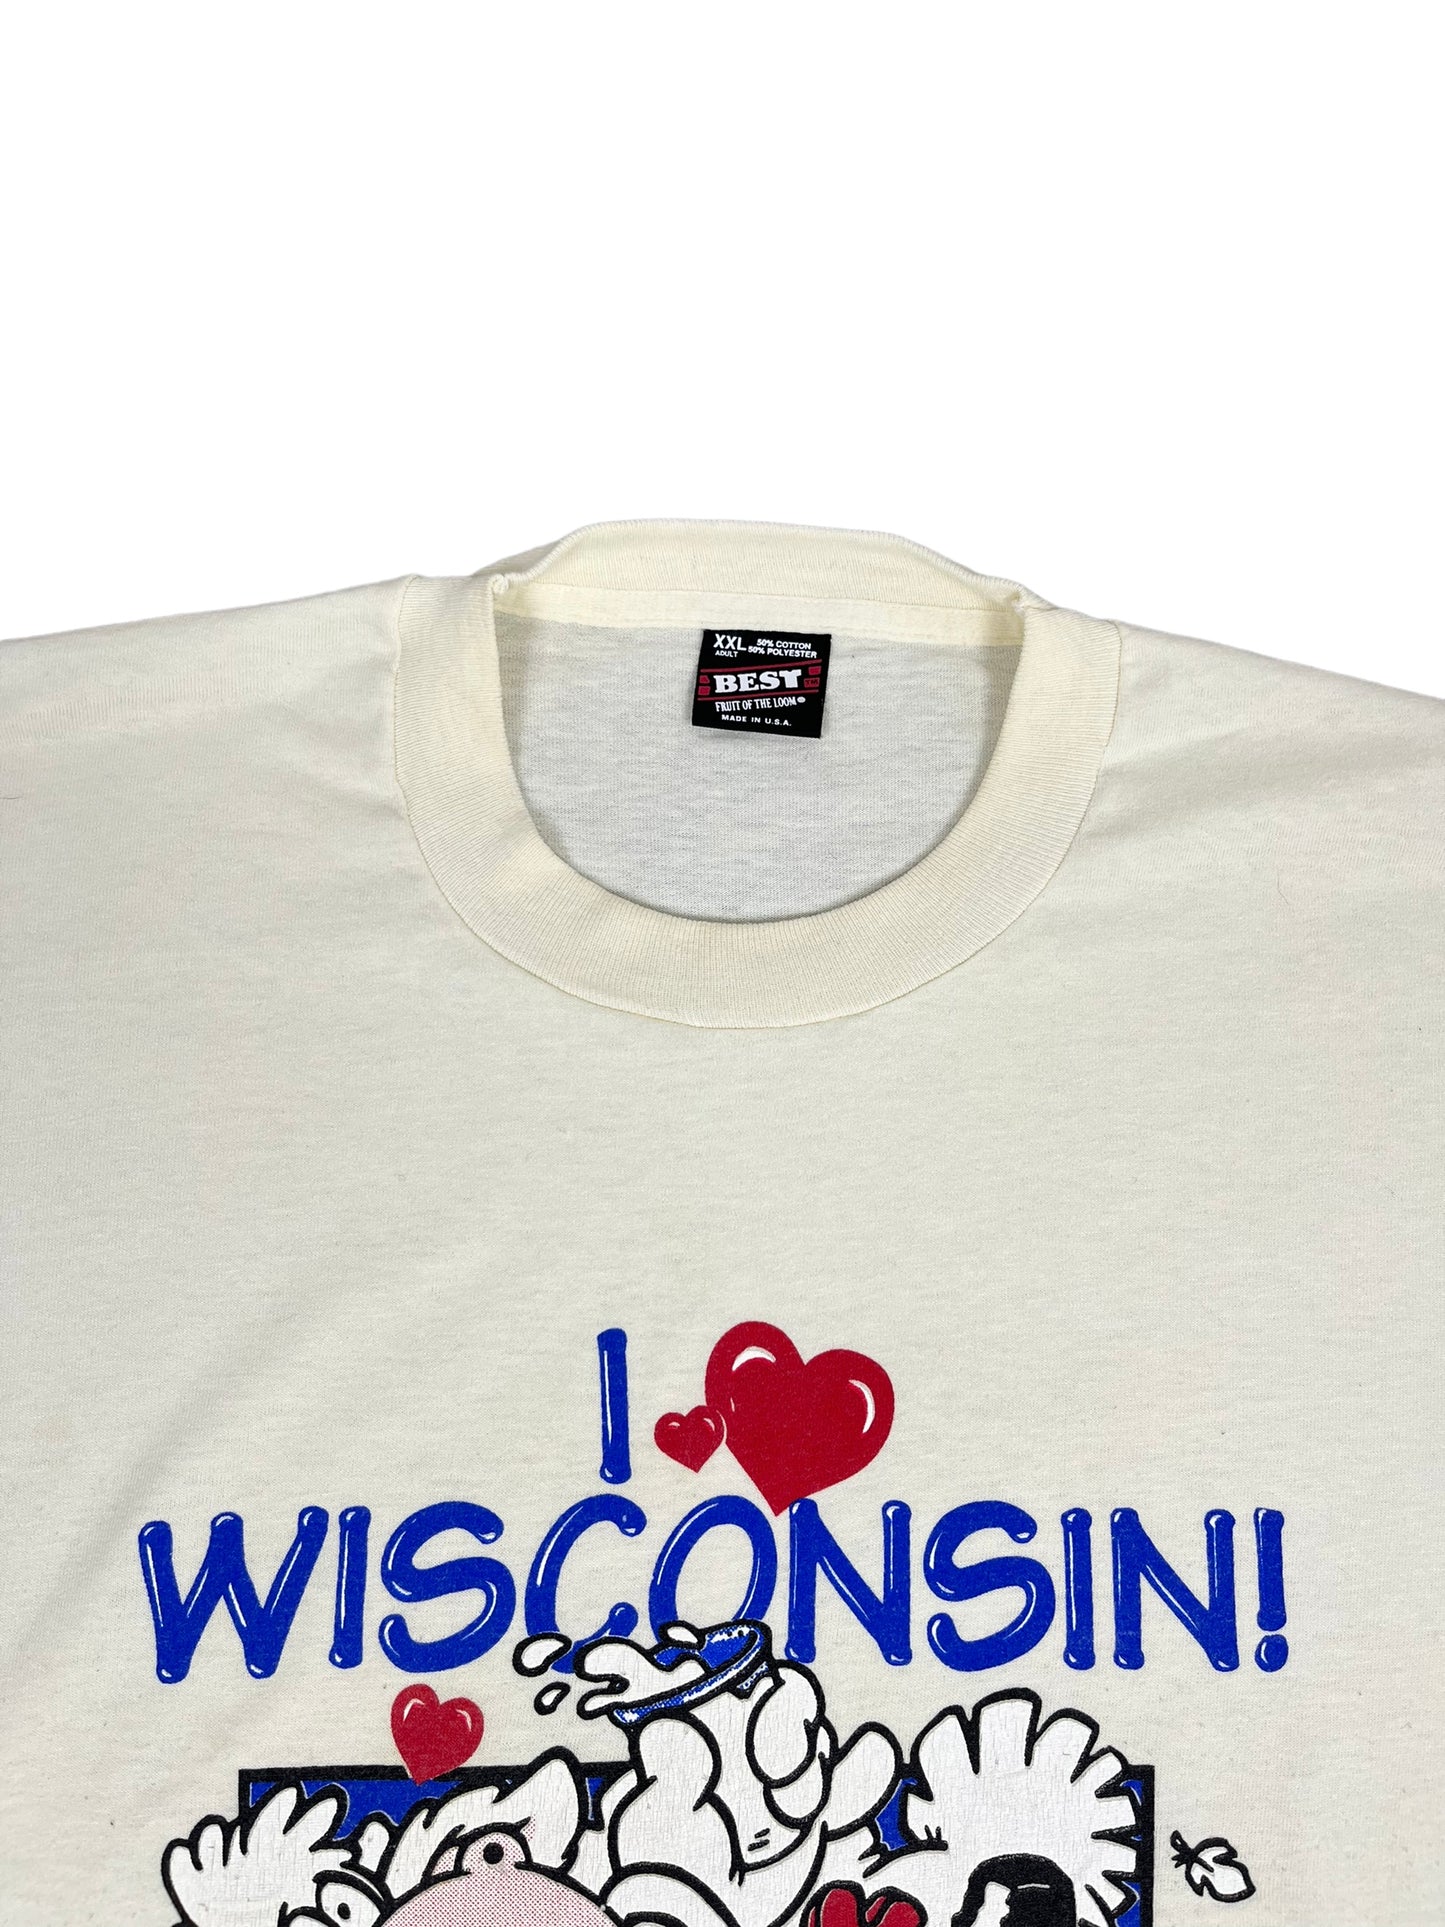 Vintage 90’s Wisconsin America’s Dairyland T Shirt - XXL